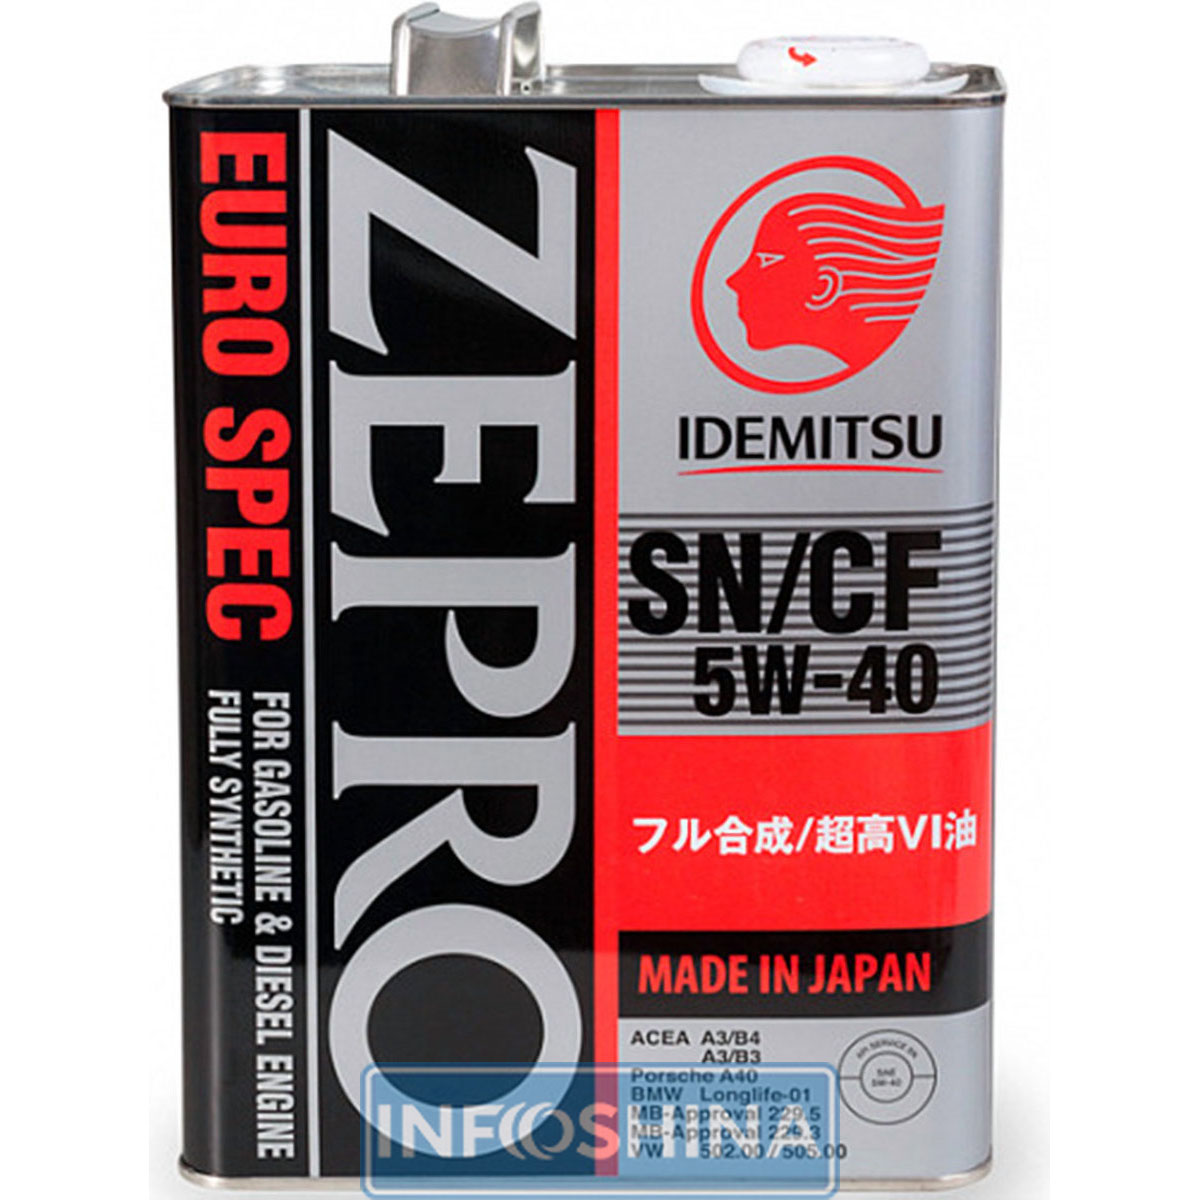 IDEMITSU Zepro Euro Spec 5W-40 SN/CF